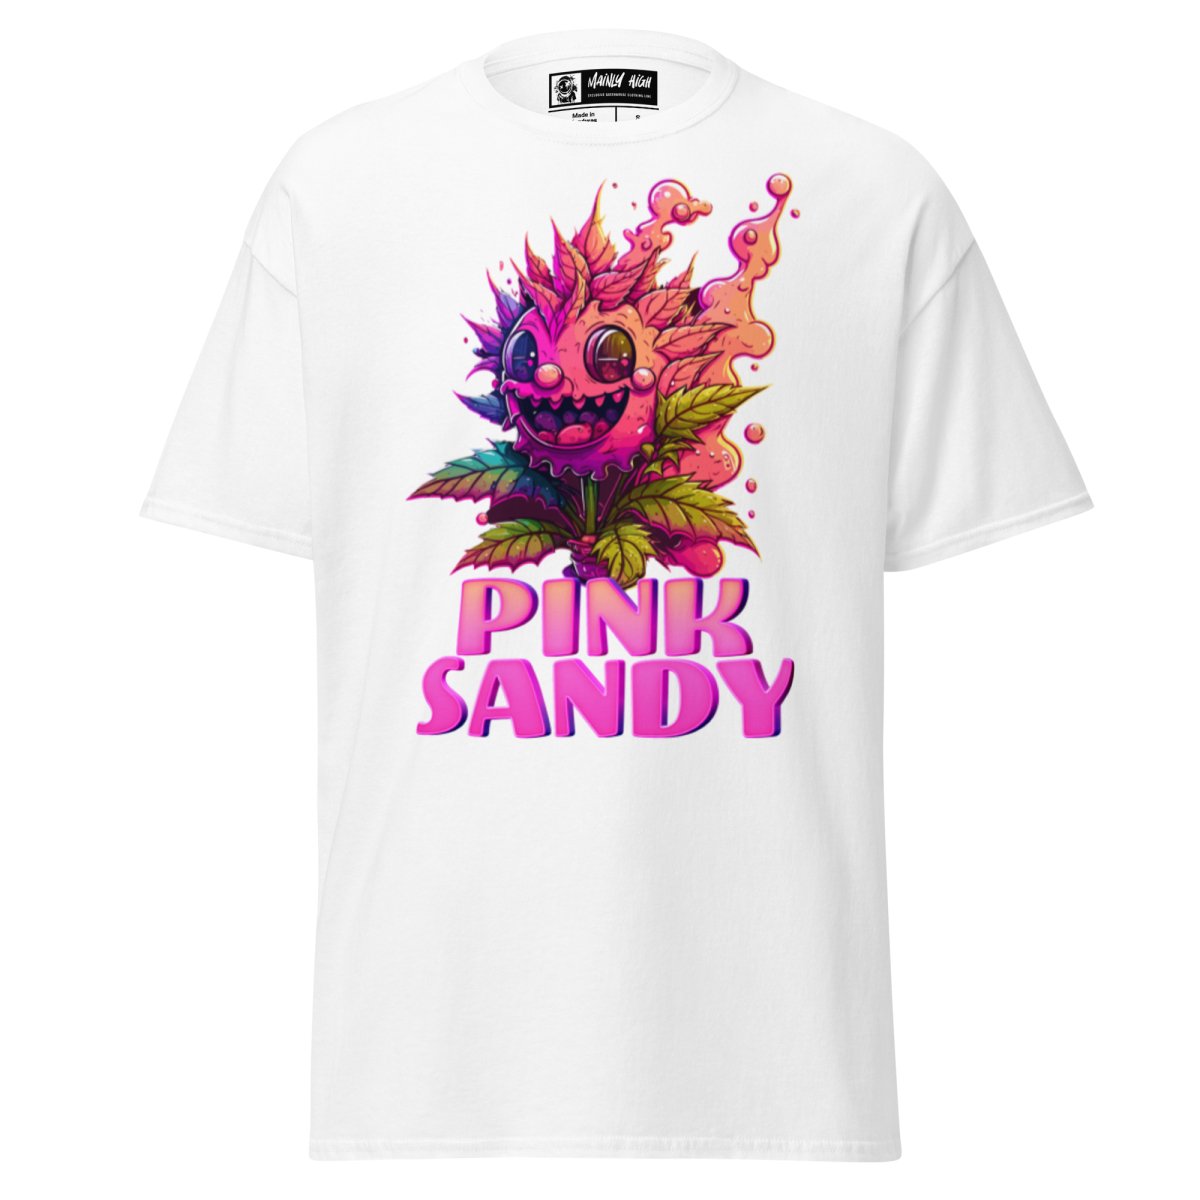 Pink Sandy T-Shirt - Mainly High